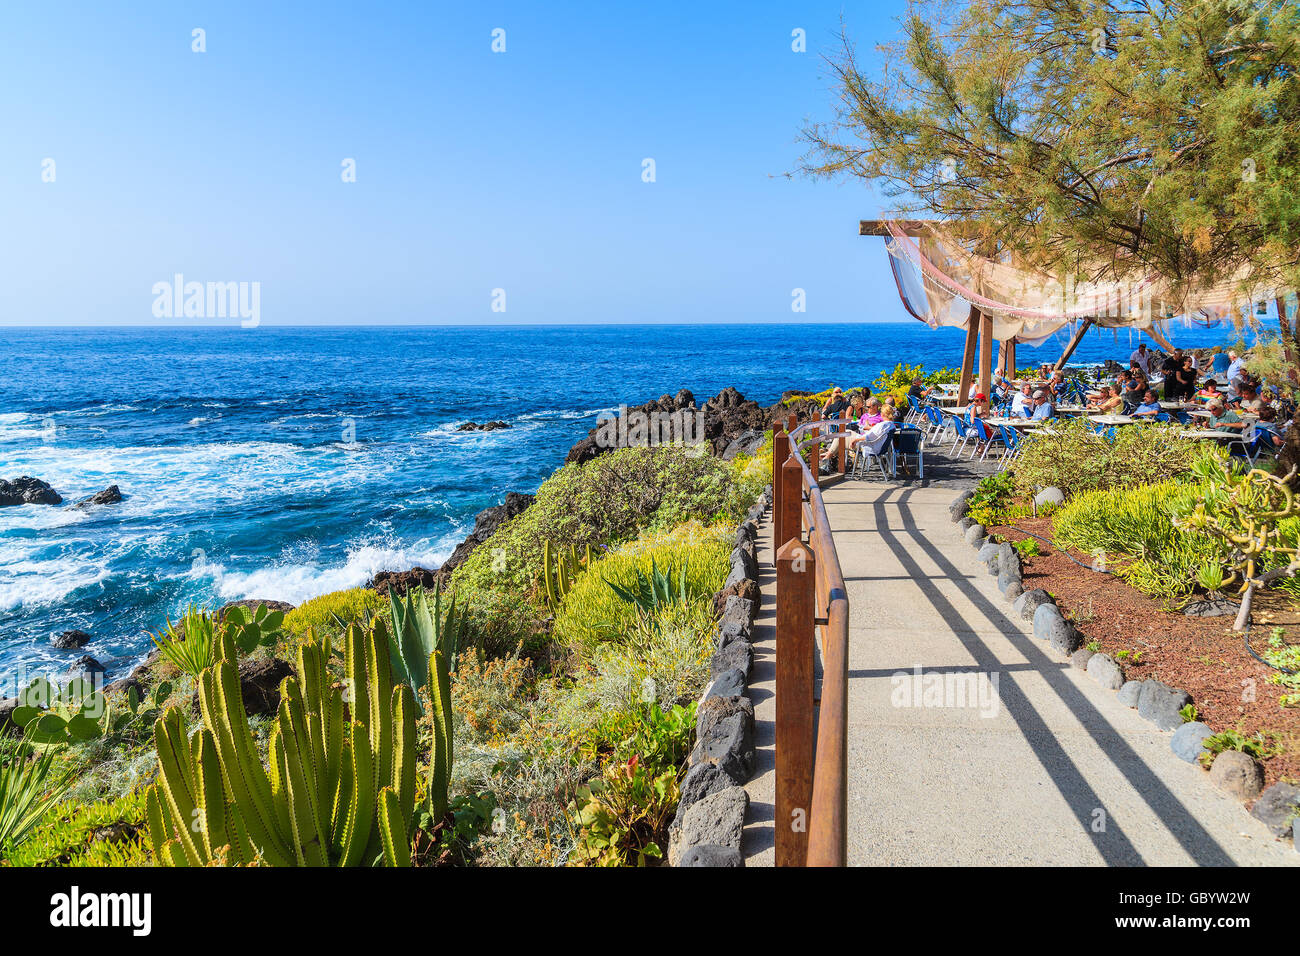 BUENAVISTA DEL NORTE, TENERIFE, NOV 15, 2015: walkway along Atlantic Ocean to restaurant on coast of Tenerife, Canary Islands, S Stock Photo